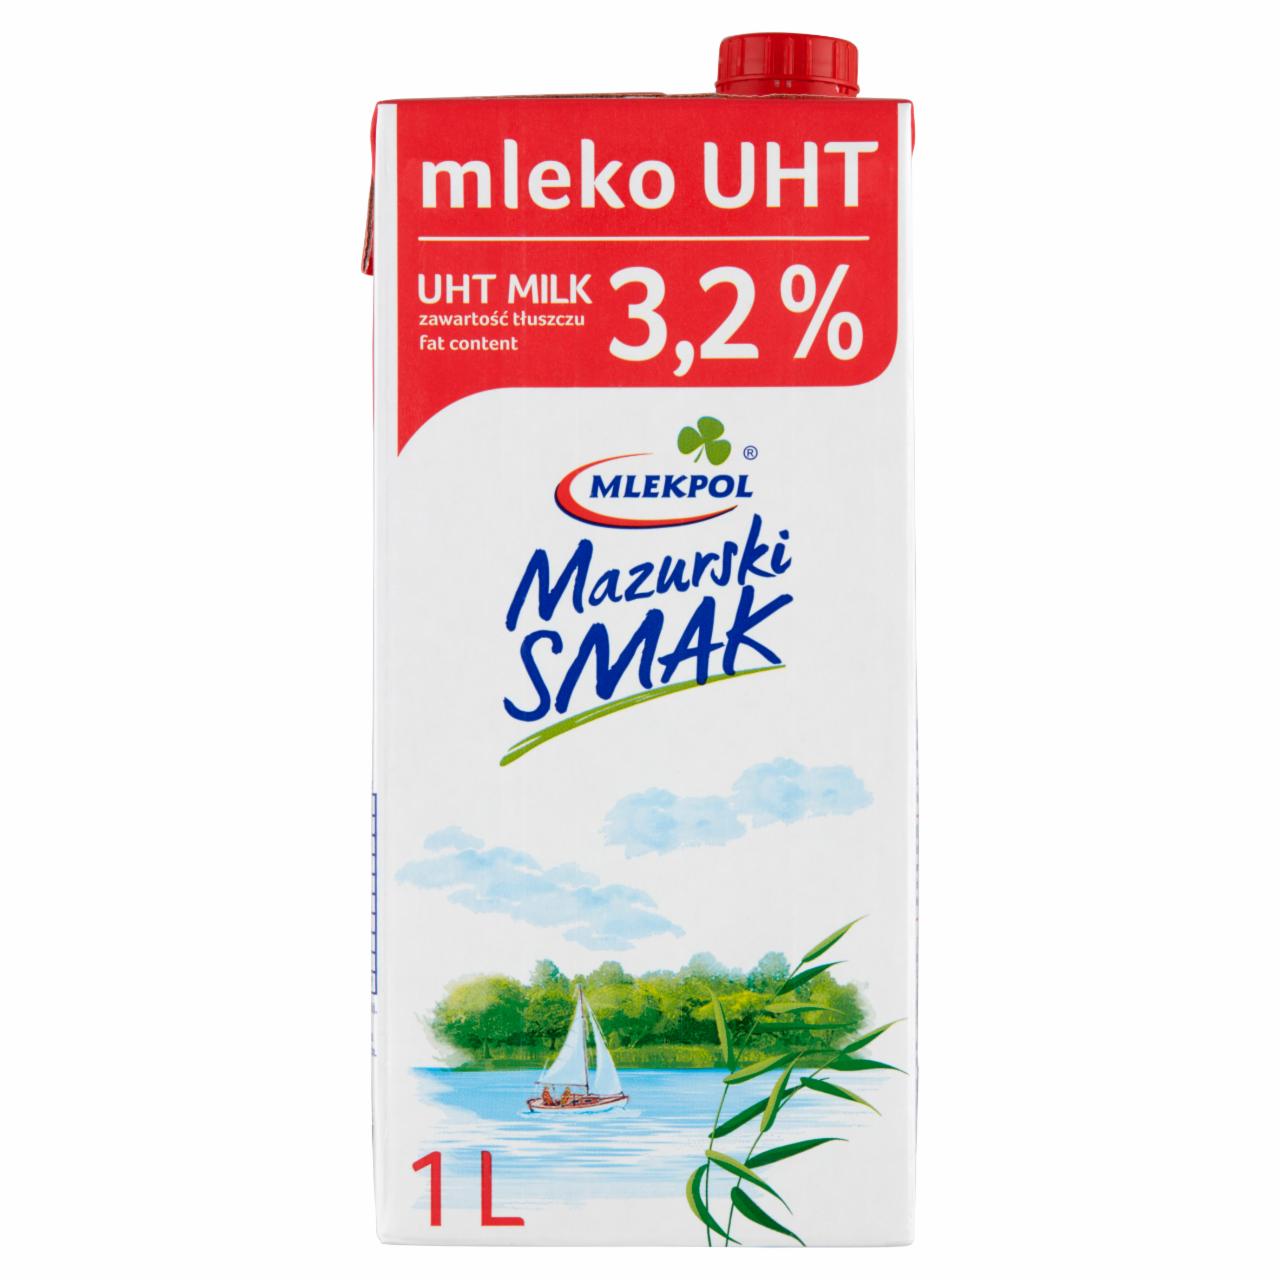 Zdjęcia - Mlekpol Mazurski Smak Mleko UHT 3,2% 1 l